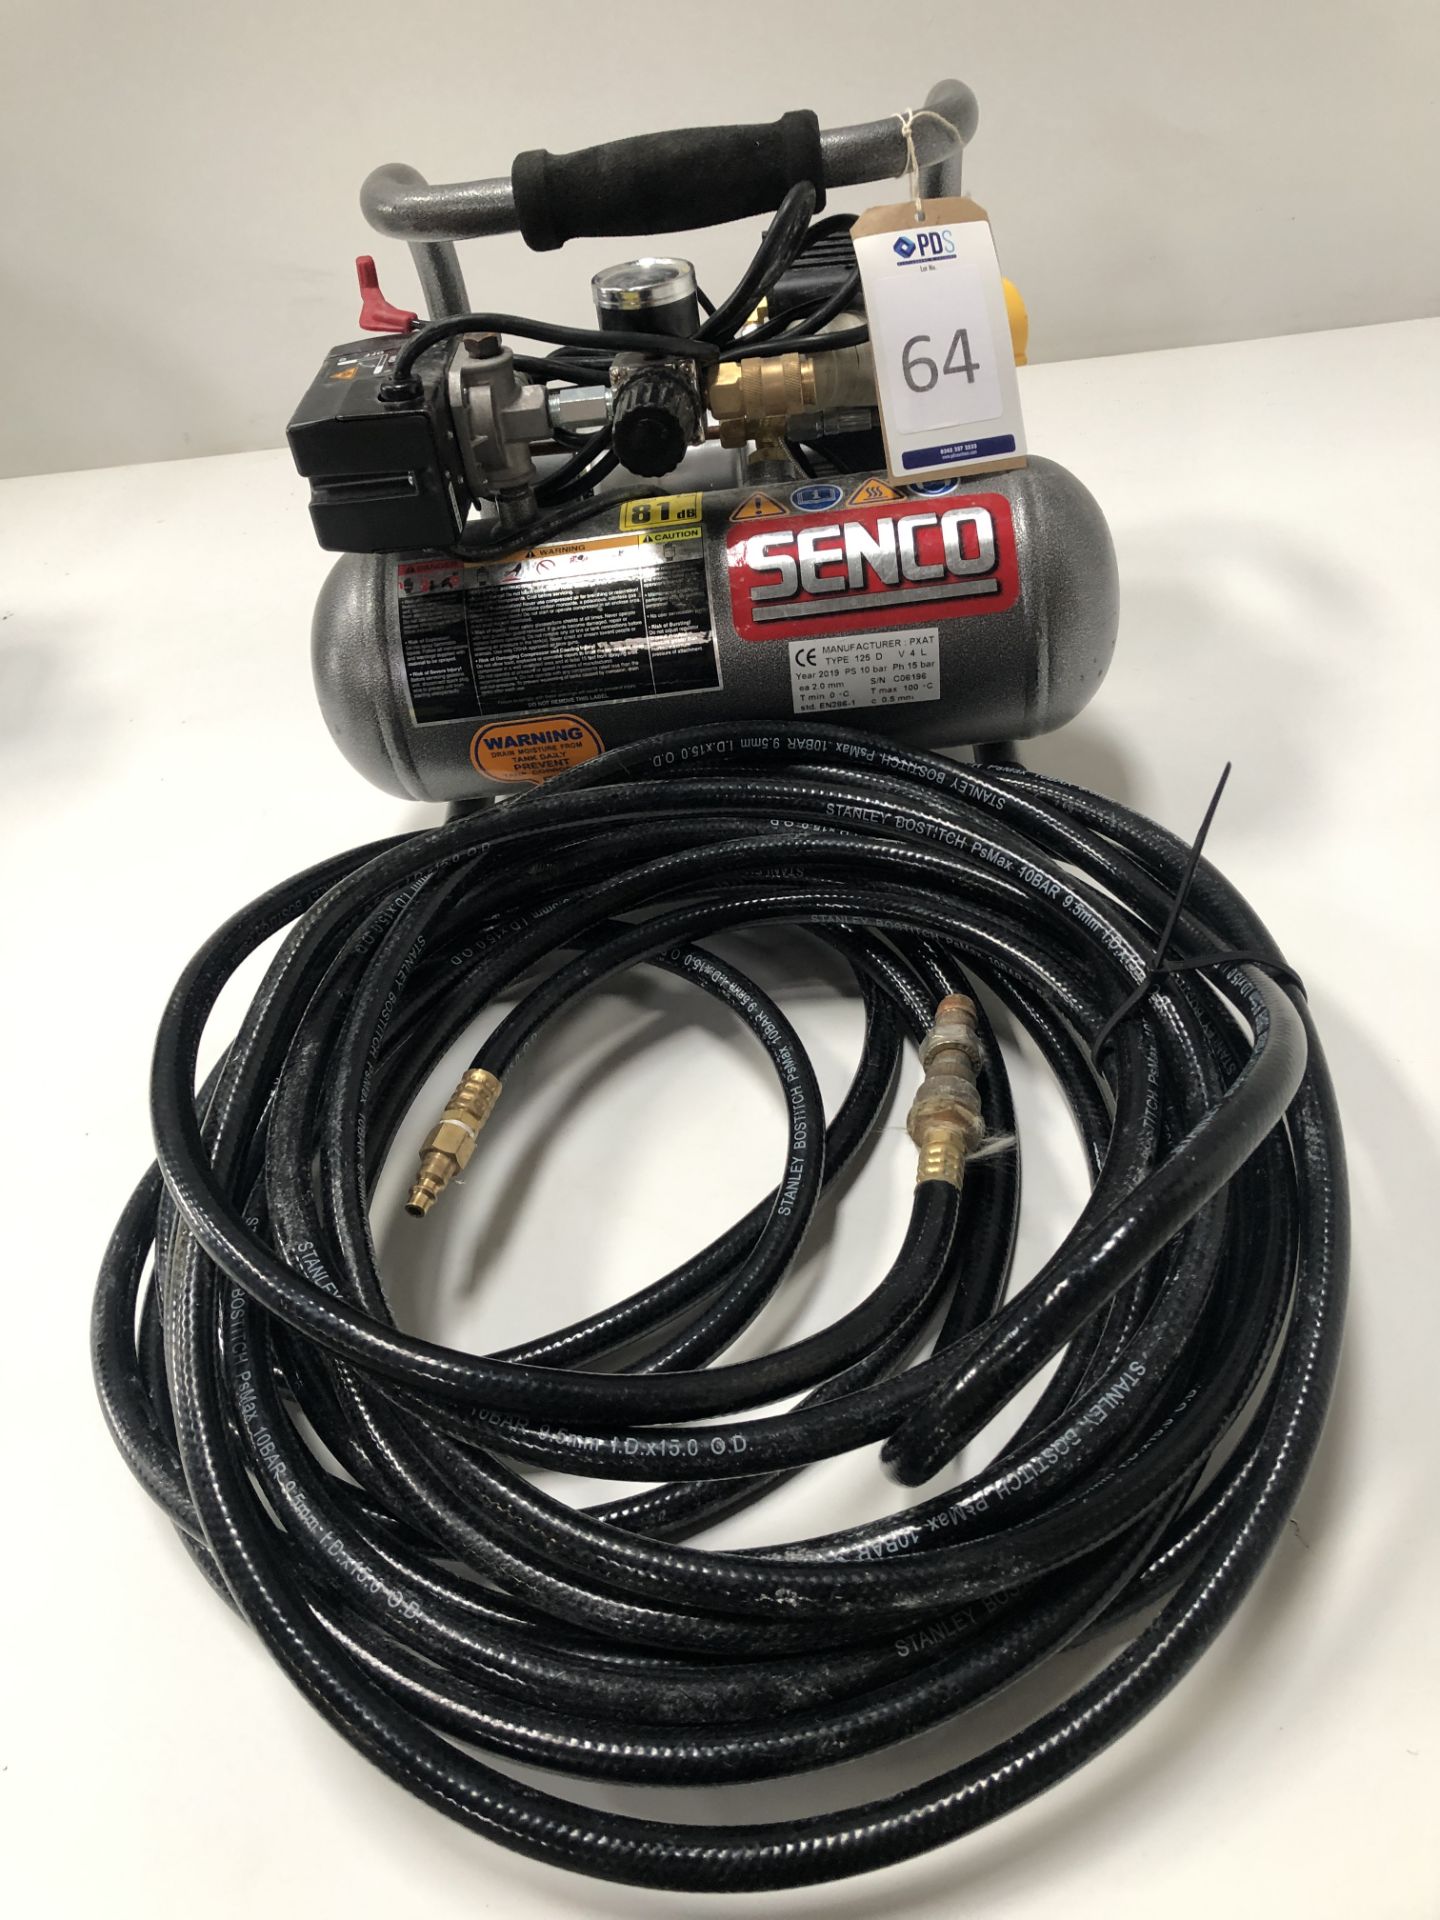 Senco Type 125D Portable Compressor  (2019), Serial Number C06196, 15 Bar, 110v (Location: